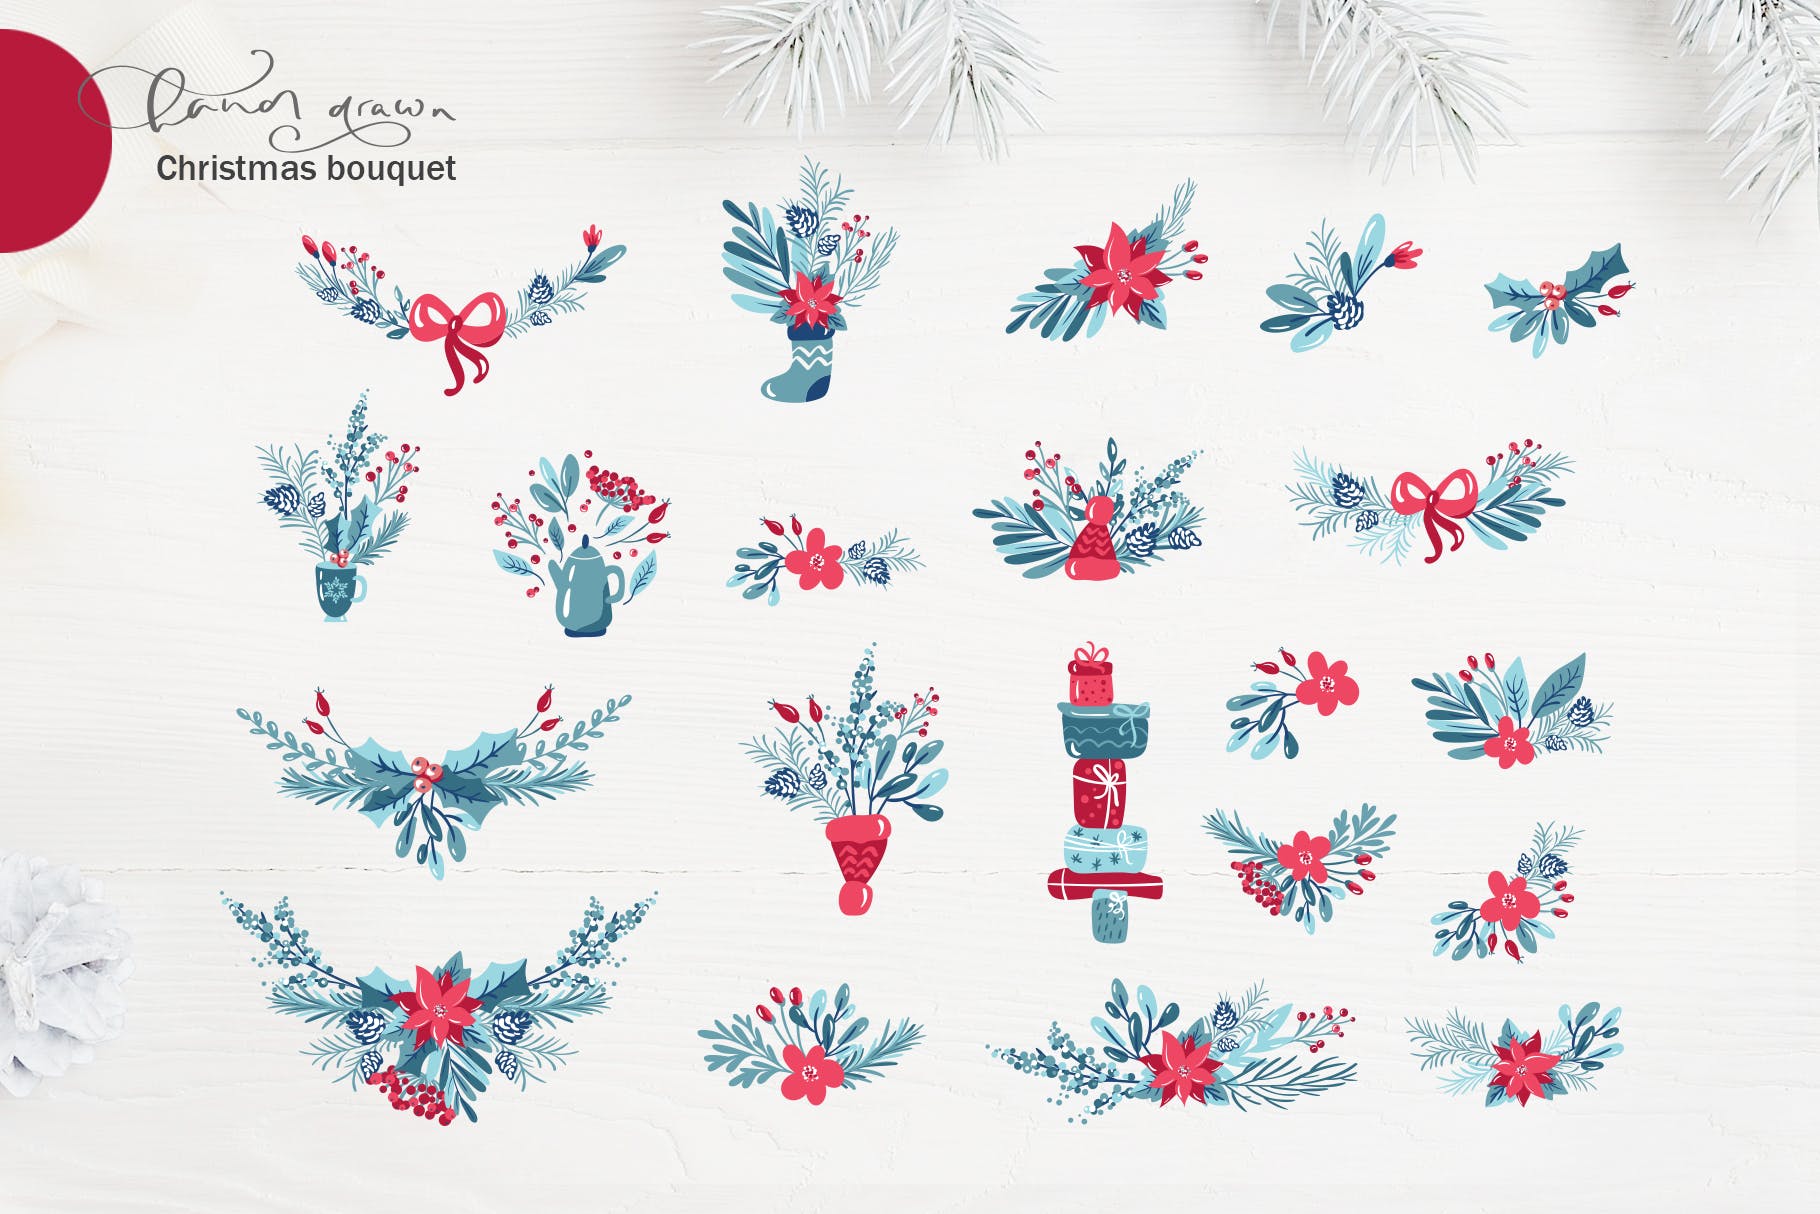 圣诞节主题元素水彩手绘设计素材 Christmas floral holiday elements插图(4)